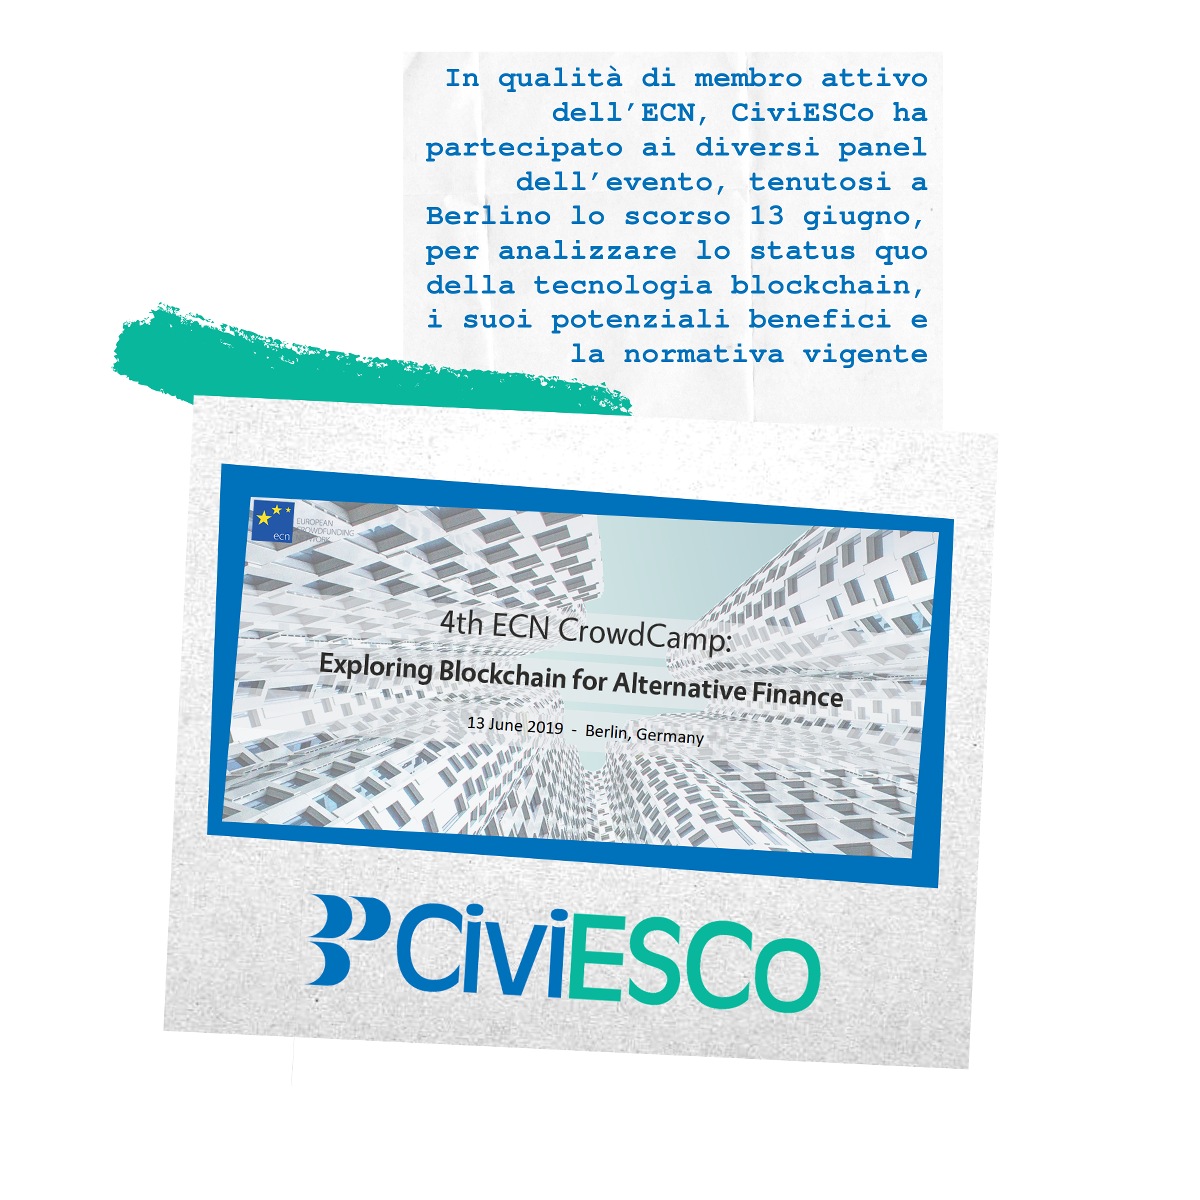 CiviESCo - CrowdCamp